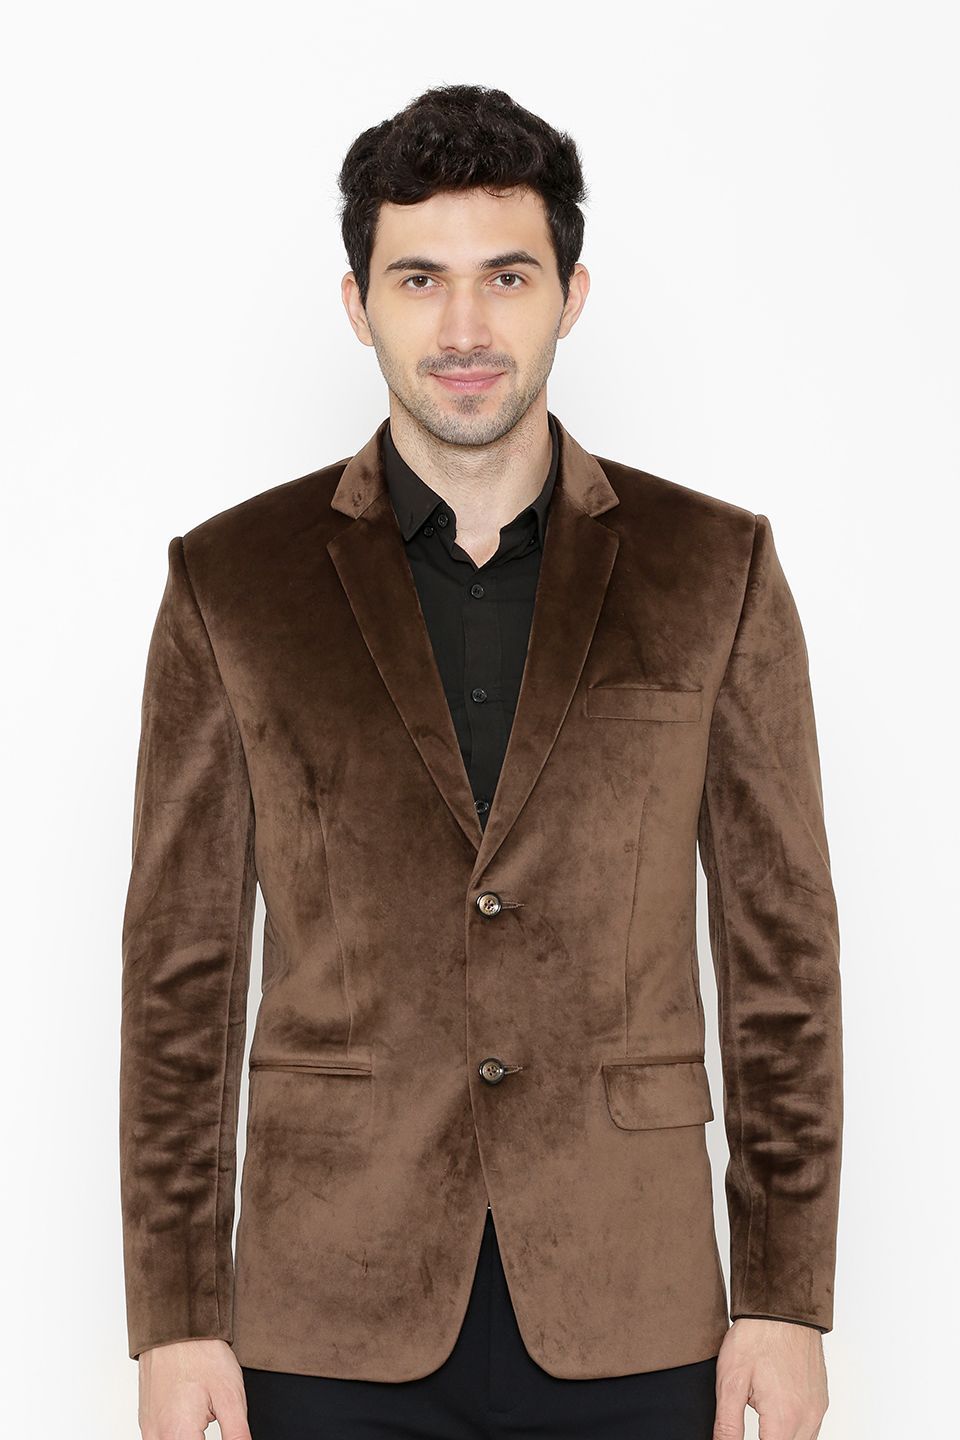 Wintage Men's Cotton Velvet Solid Party Blazer : Brown-1